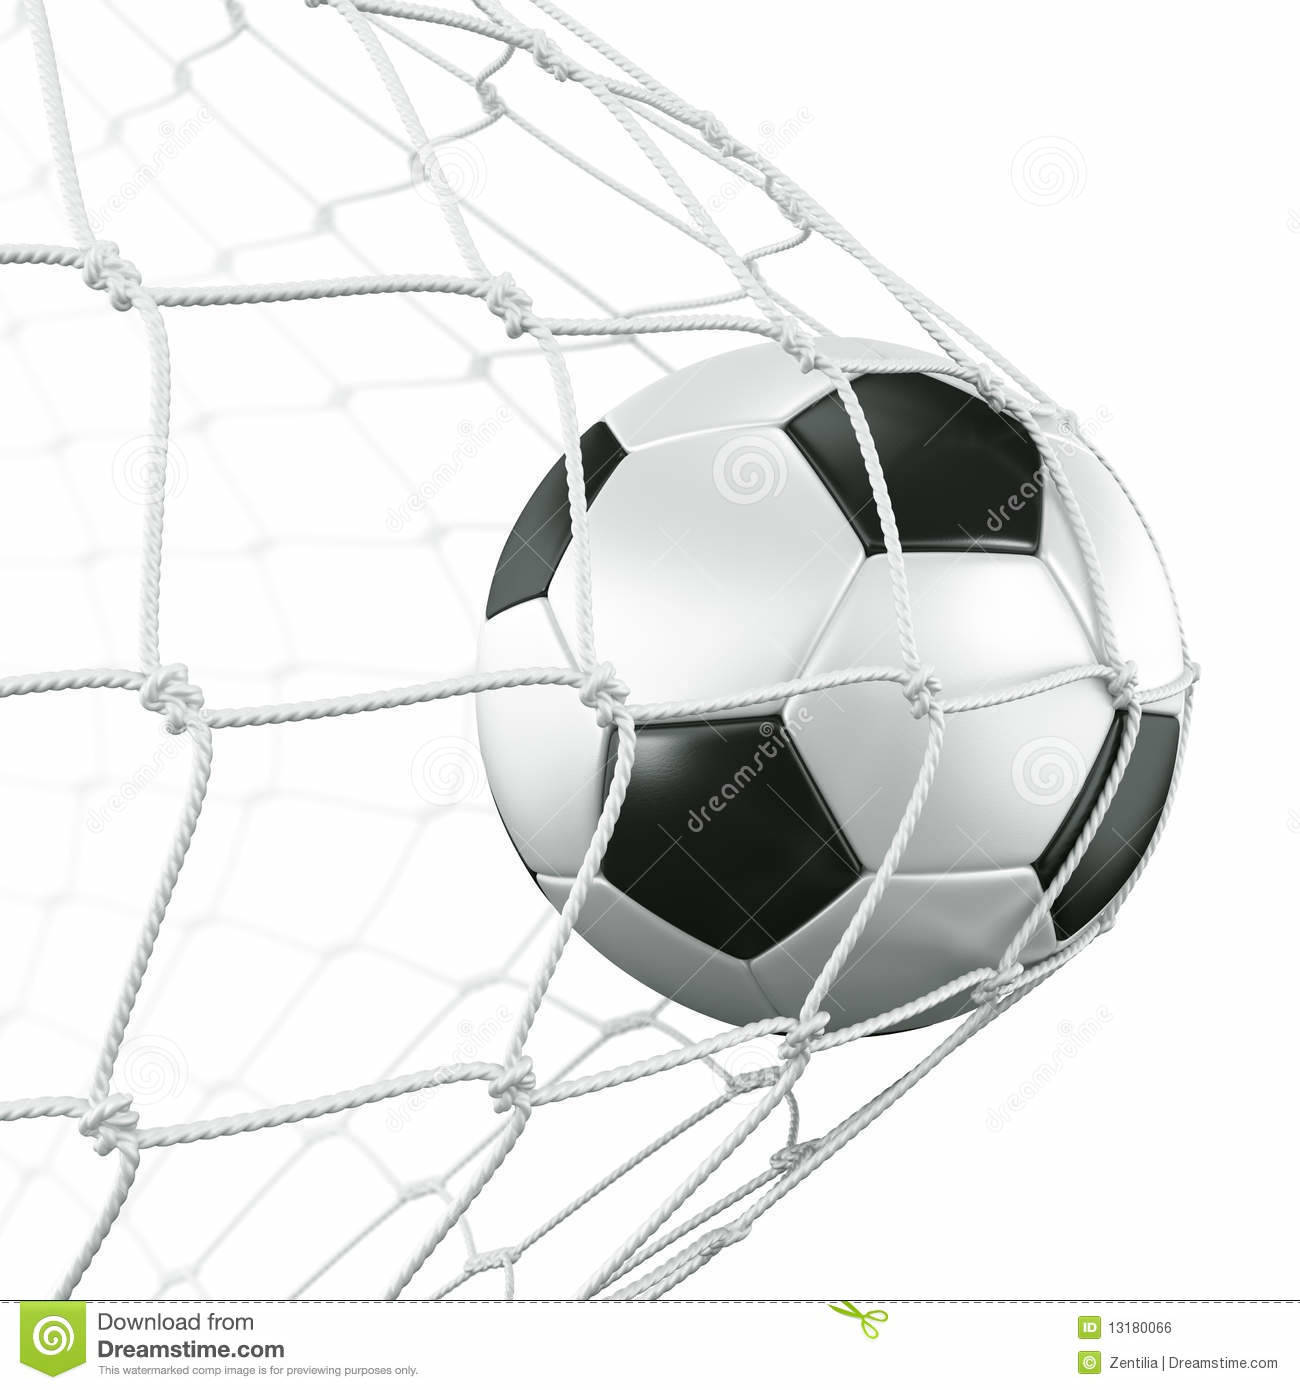 Bothell, Inglemoor notch victories | Prep Girls Soccer